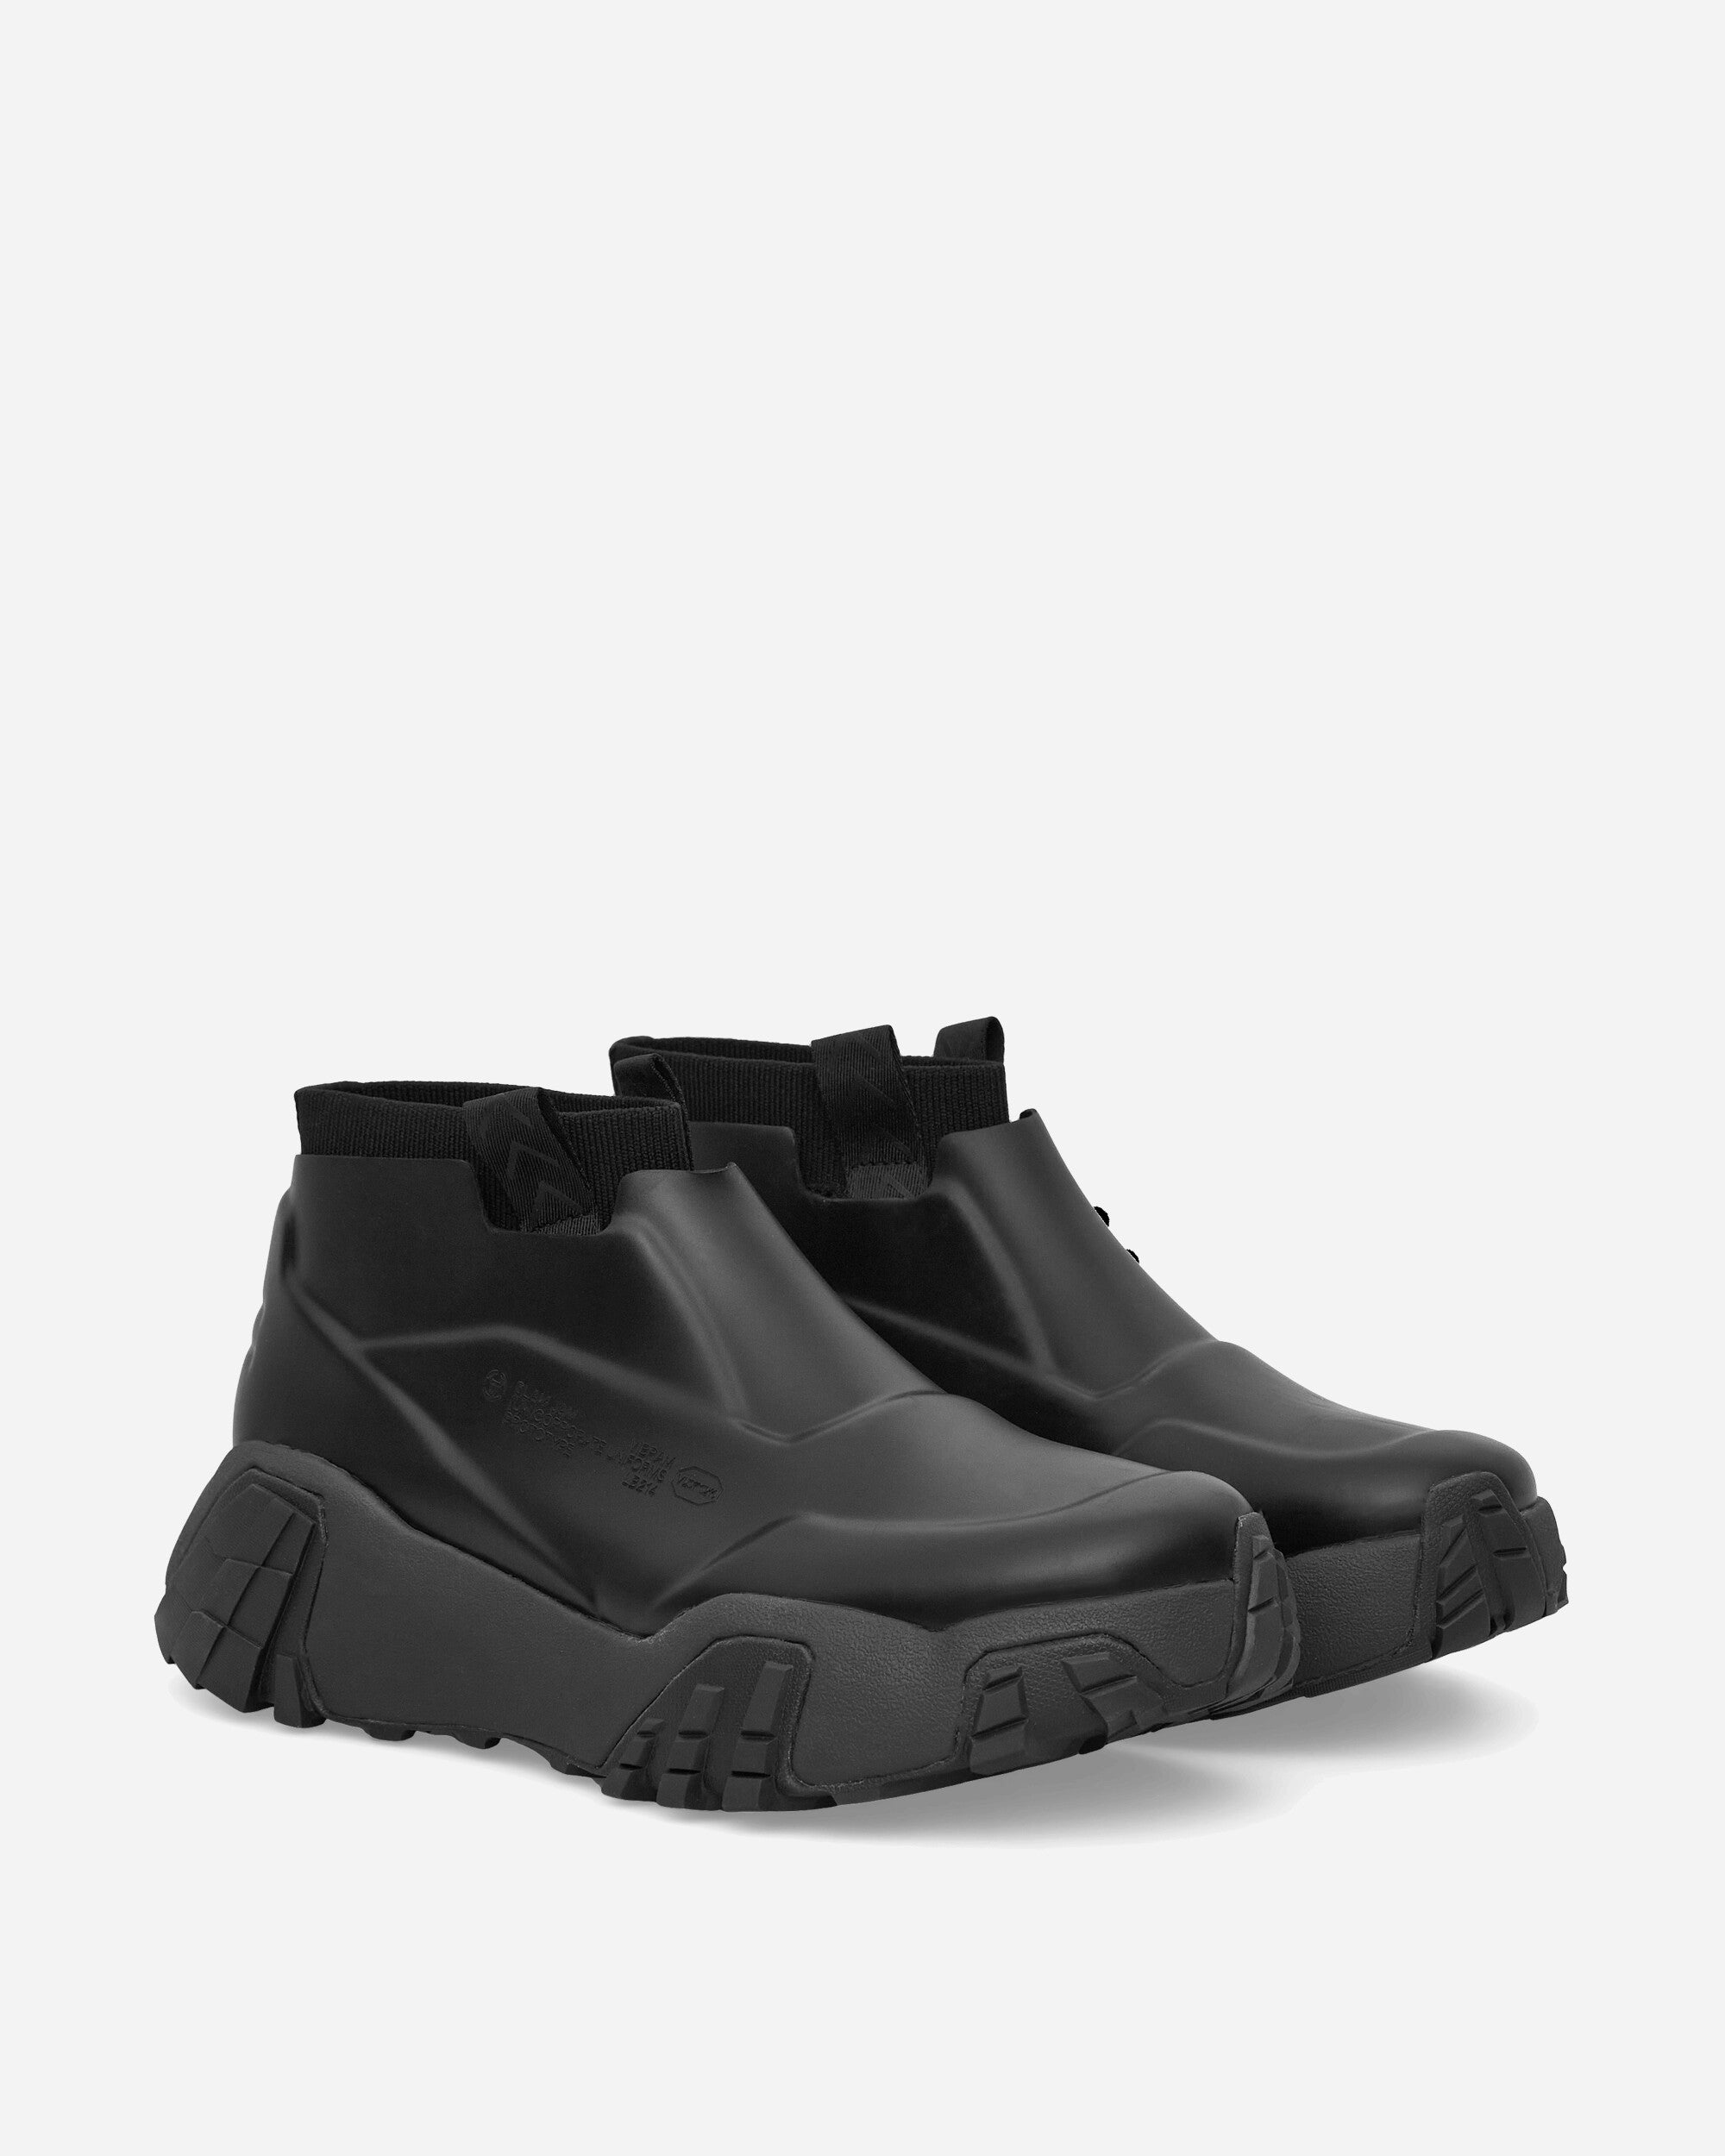 Vibram LB214 Post Sneakers Black